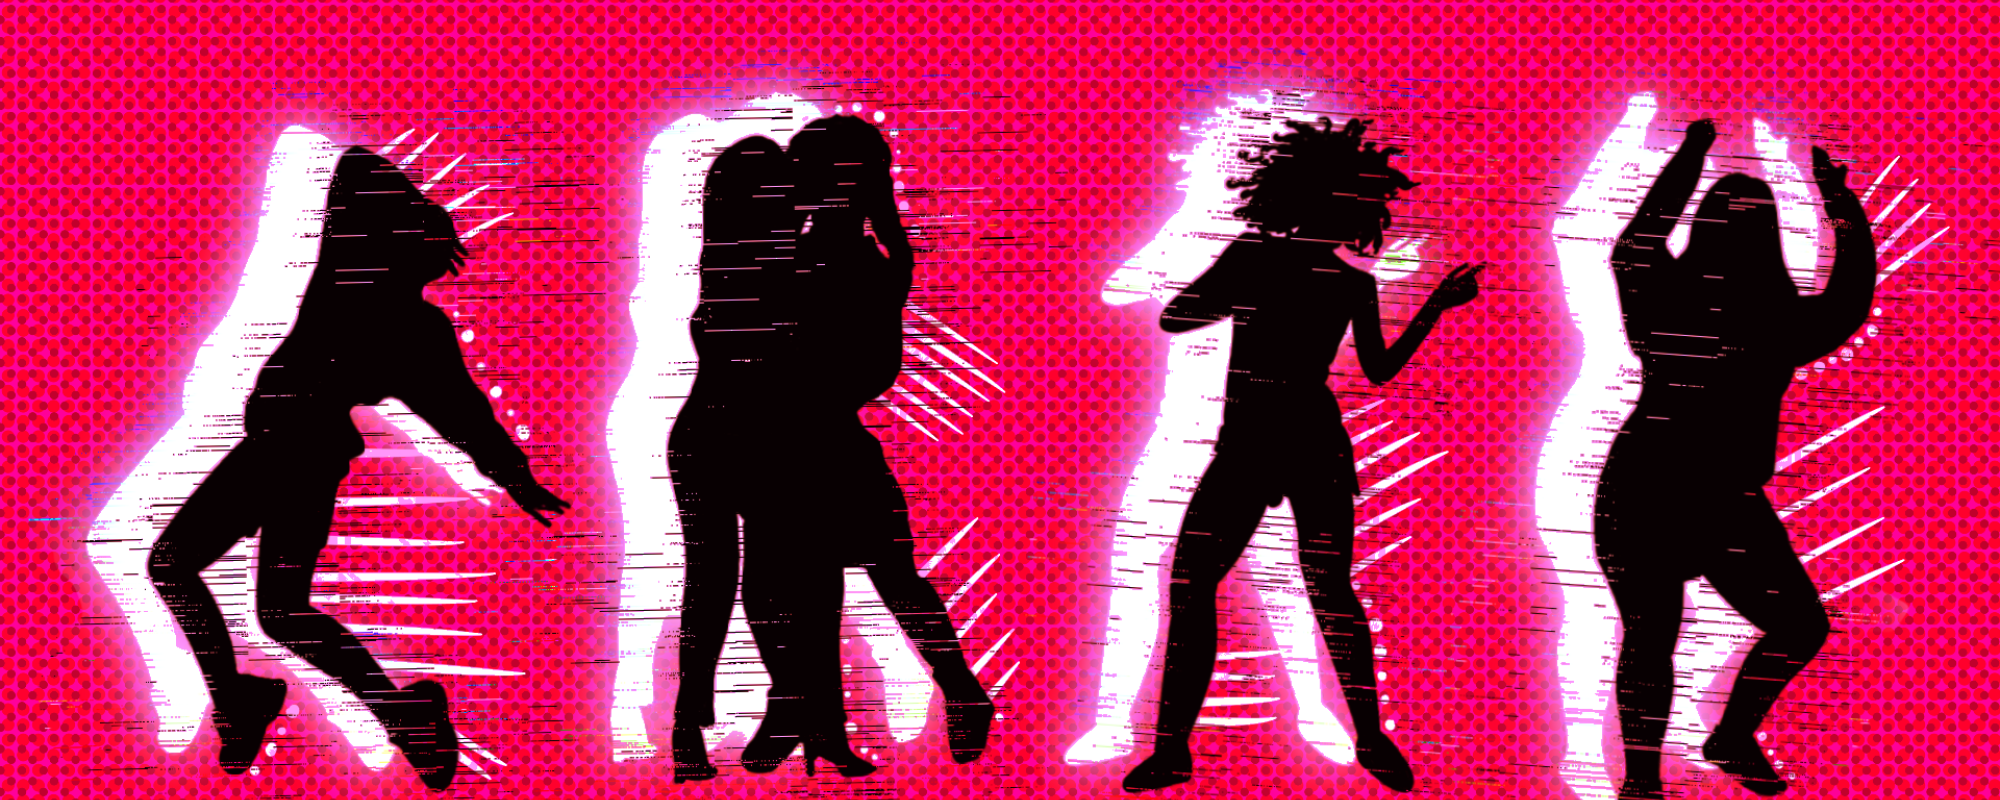 Image of 4 people dancing